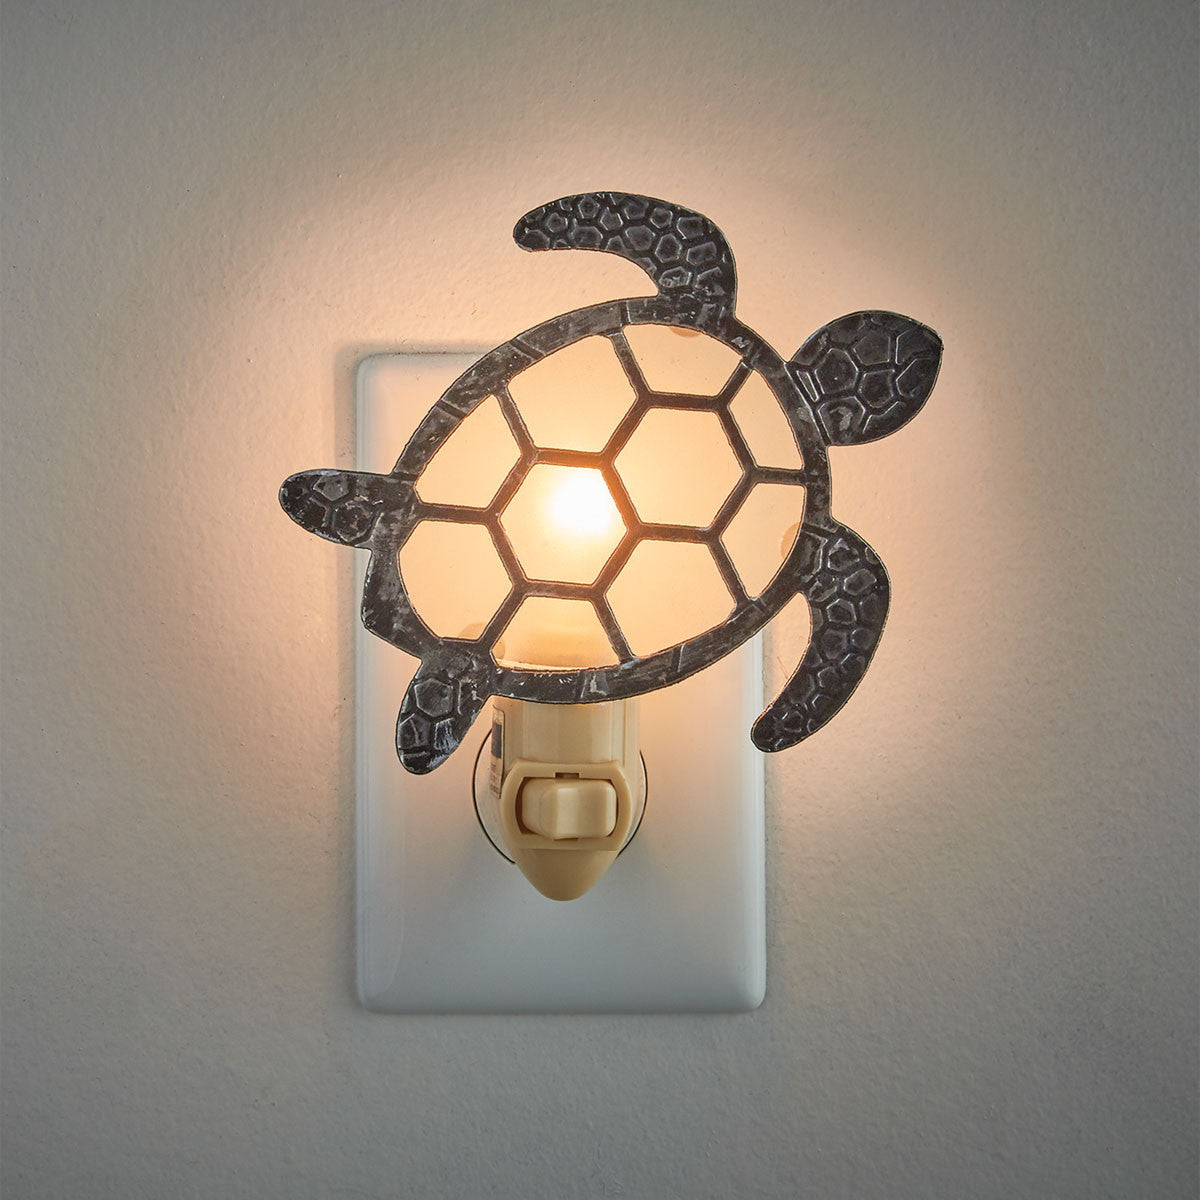 Sea Turtle Night Light - Park Designs